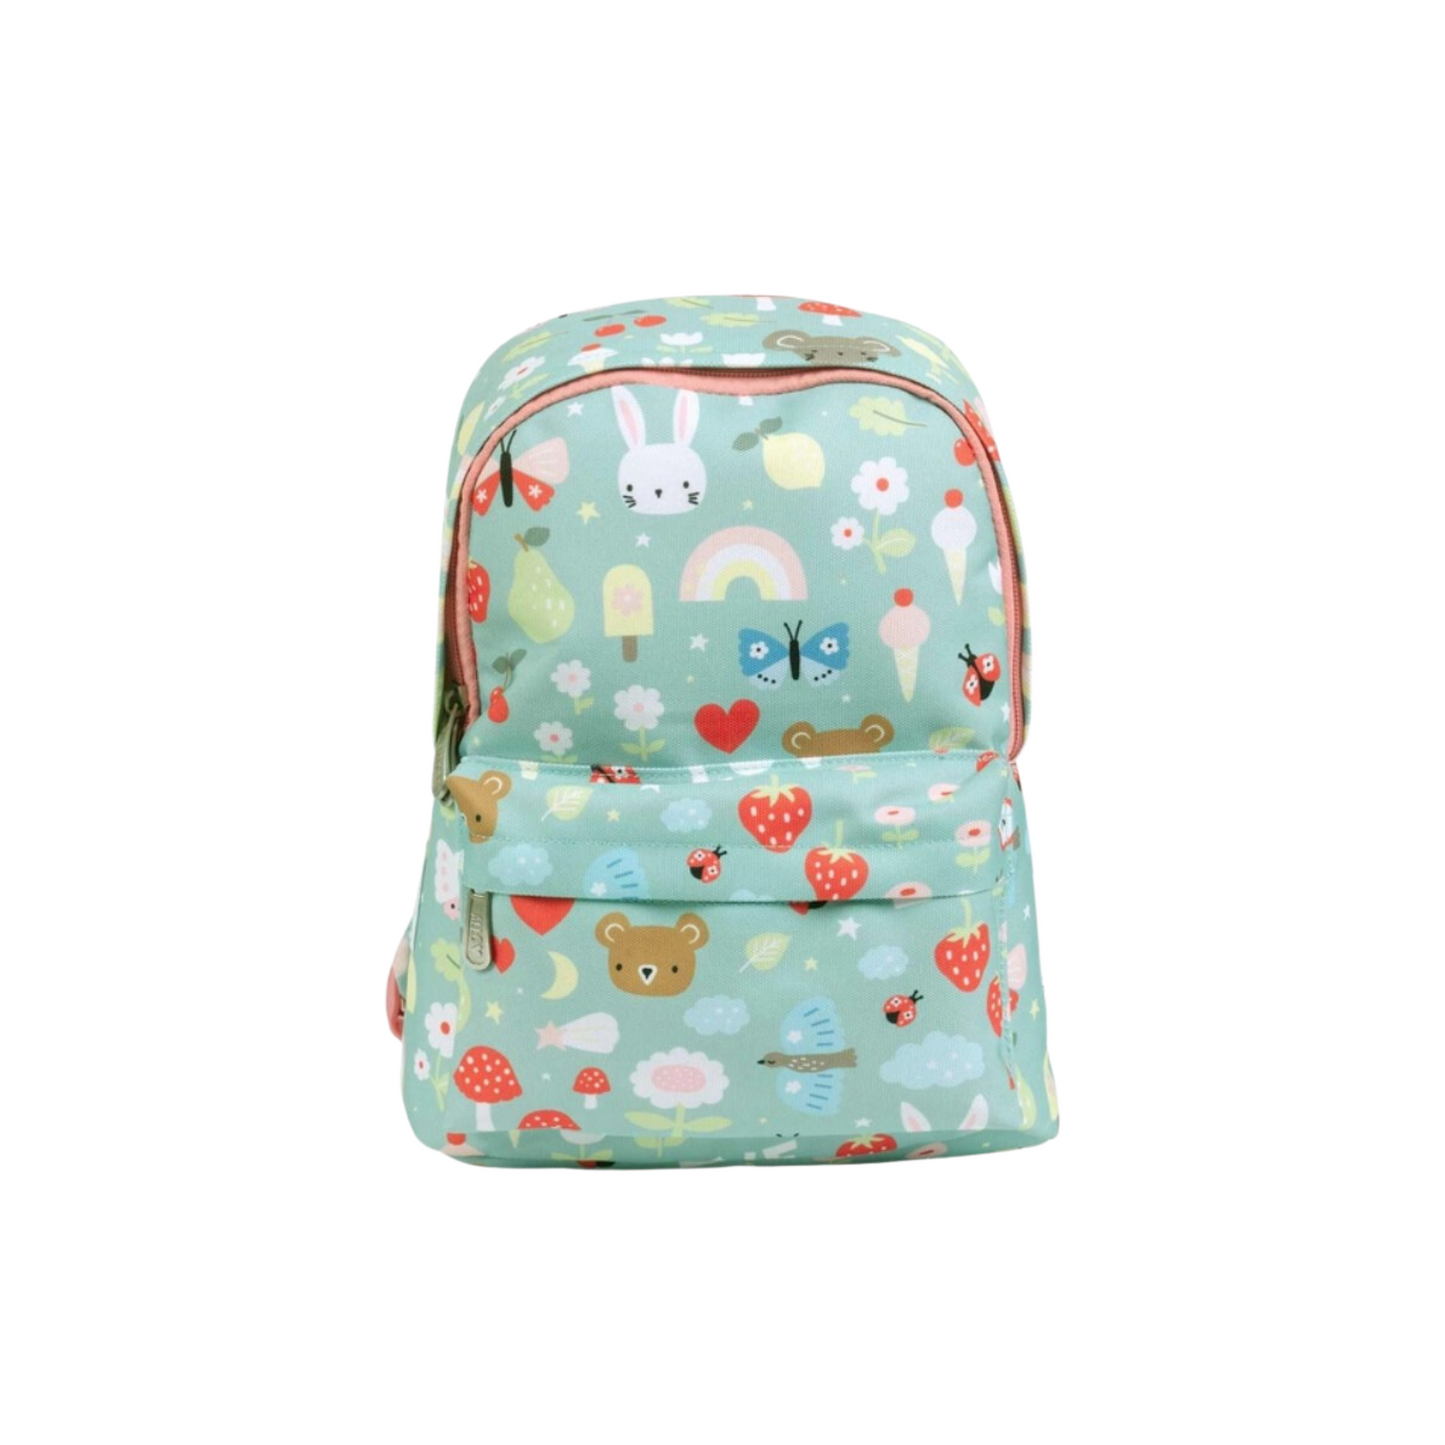 'Joy' Little Kid's Backpack